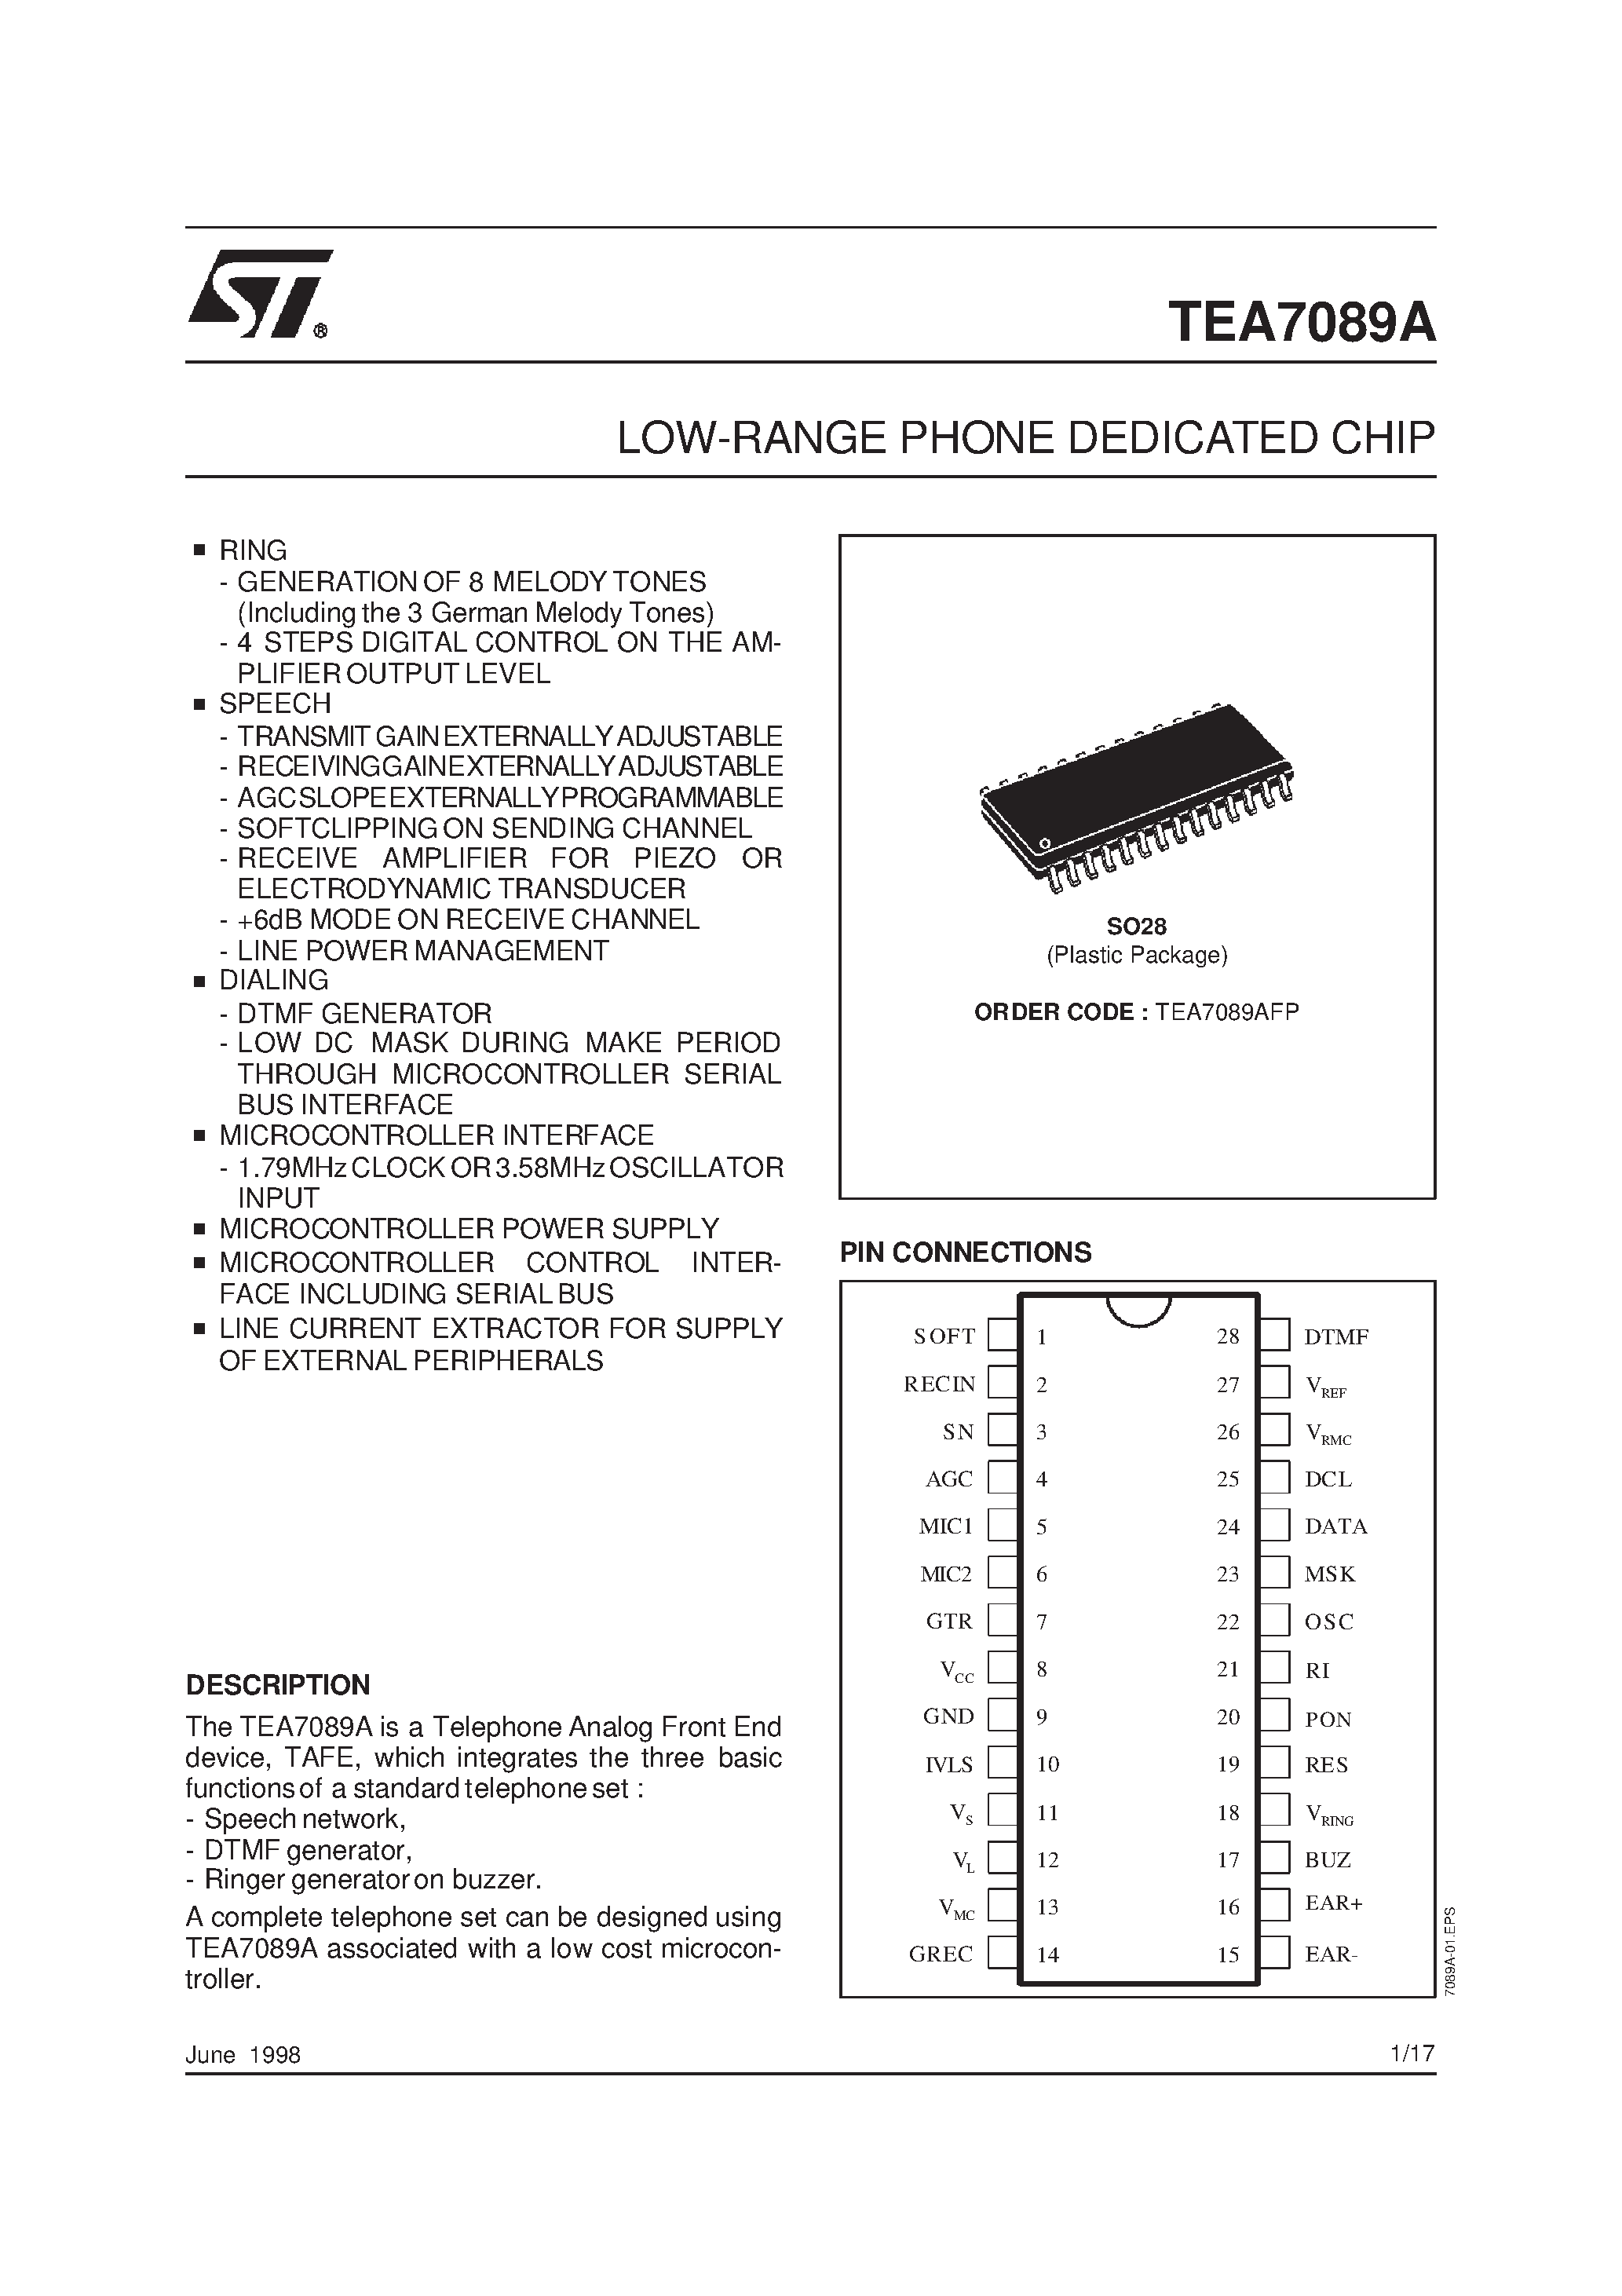 Datasheet TEA7089A - LOW-RANGE PHONE DEDICATED CHIP page 1